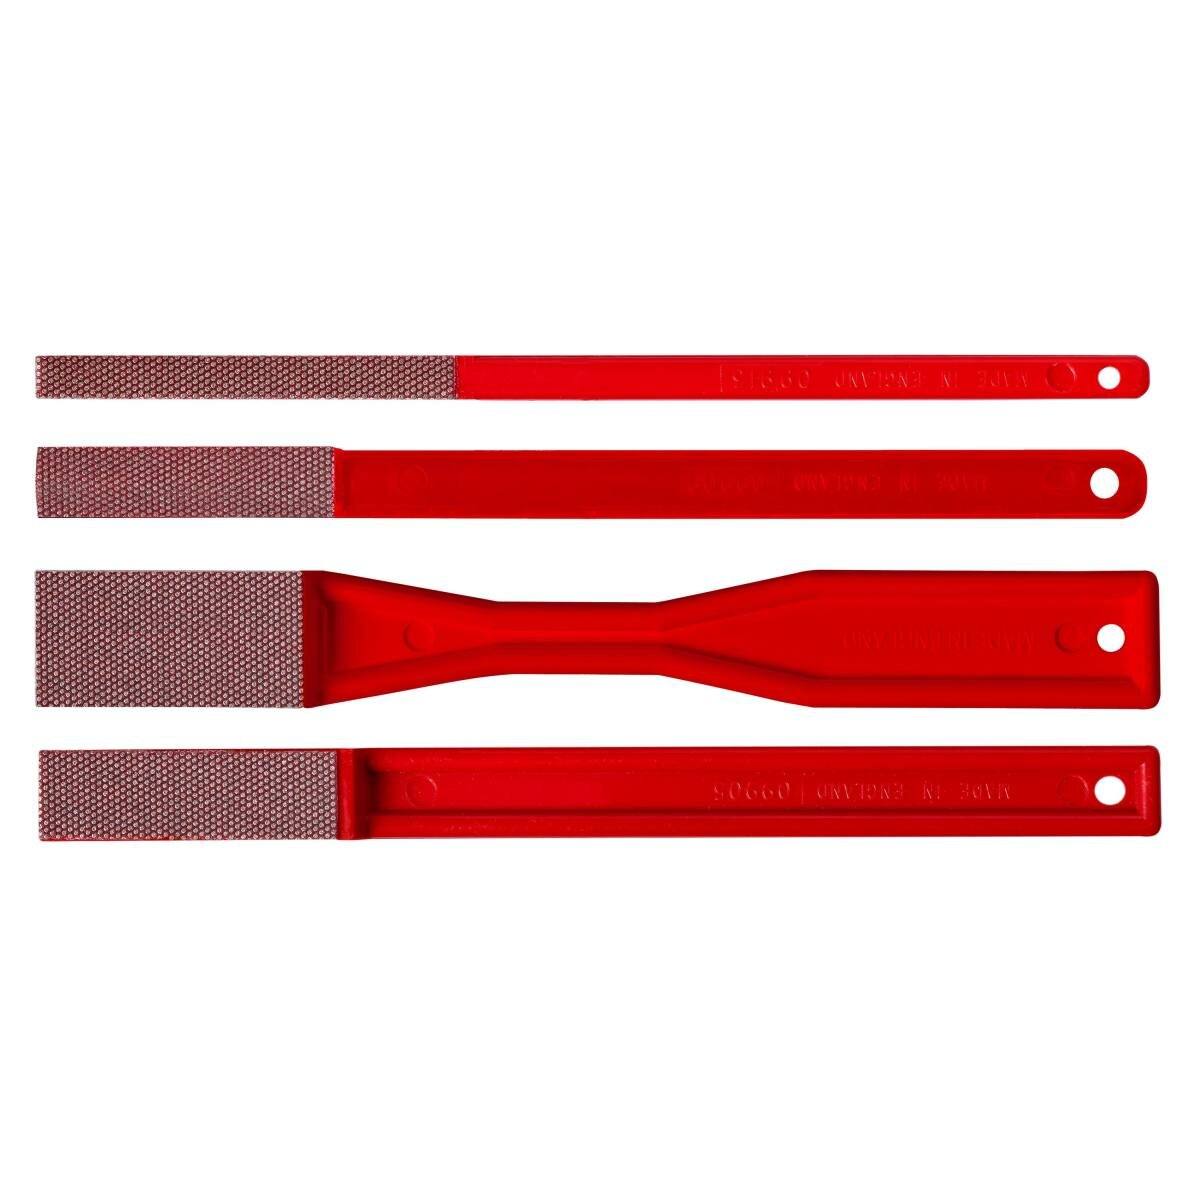  3M Joustava timanttiviila 6210J, nro 1, punainen, 19 mm x 33 mm, N74